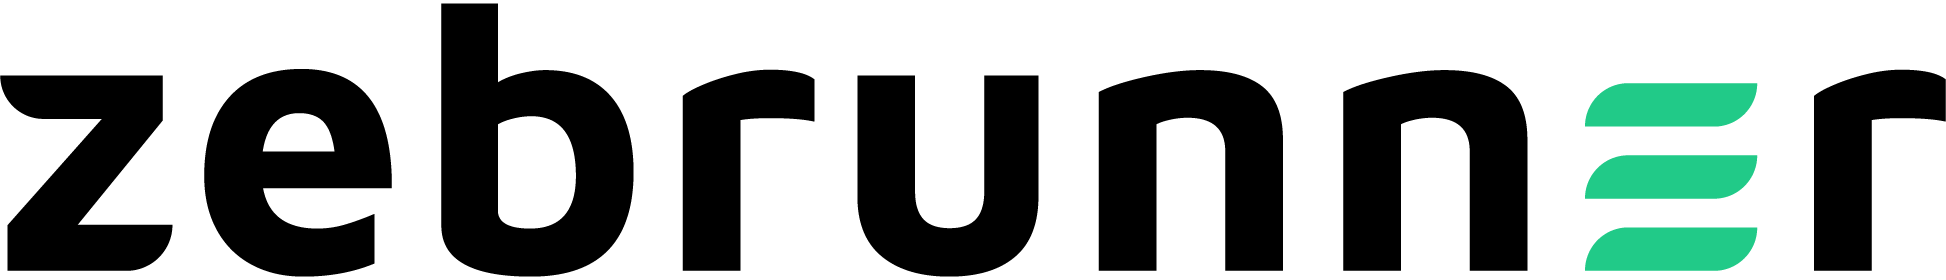 Logo Usetrace